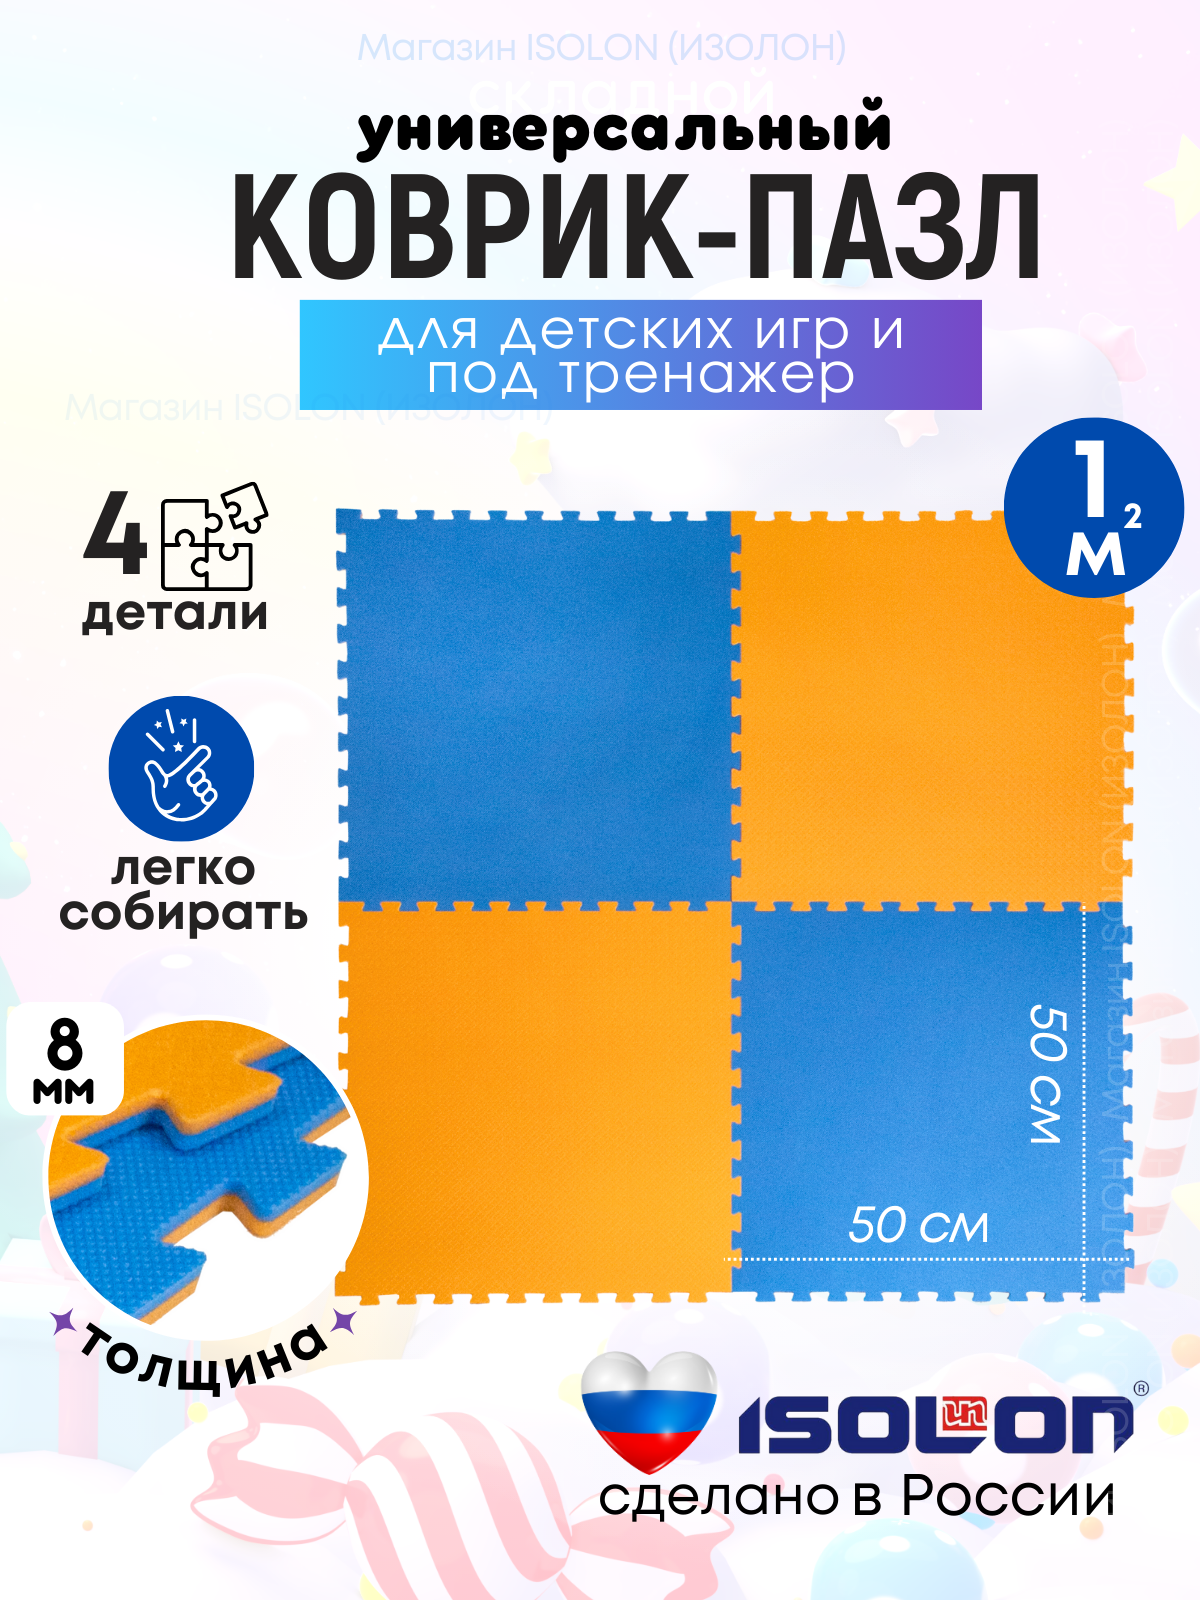 Мат коврик-пазл мягкий пол Isolon, 50х50 см, в комплекте 4 шт, синий/оранжевый коврик надувной туристический roadlike camping оранжевый оранжевый